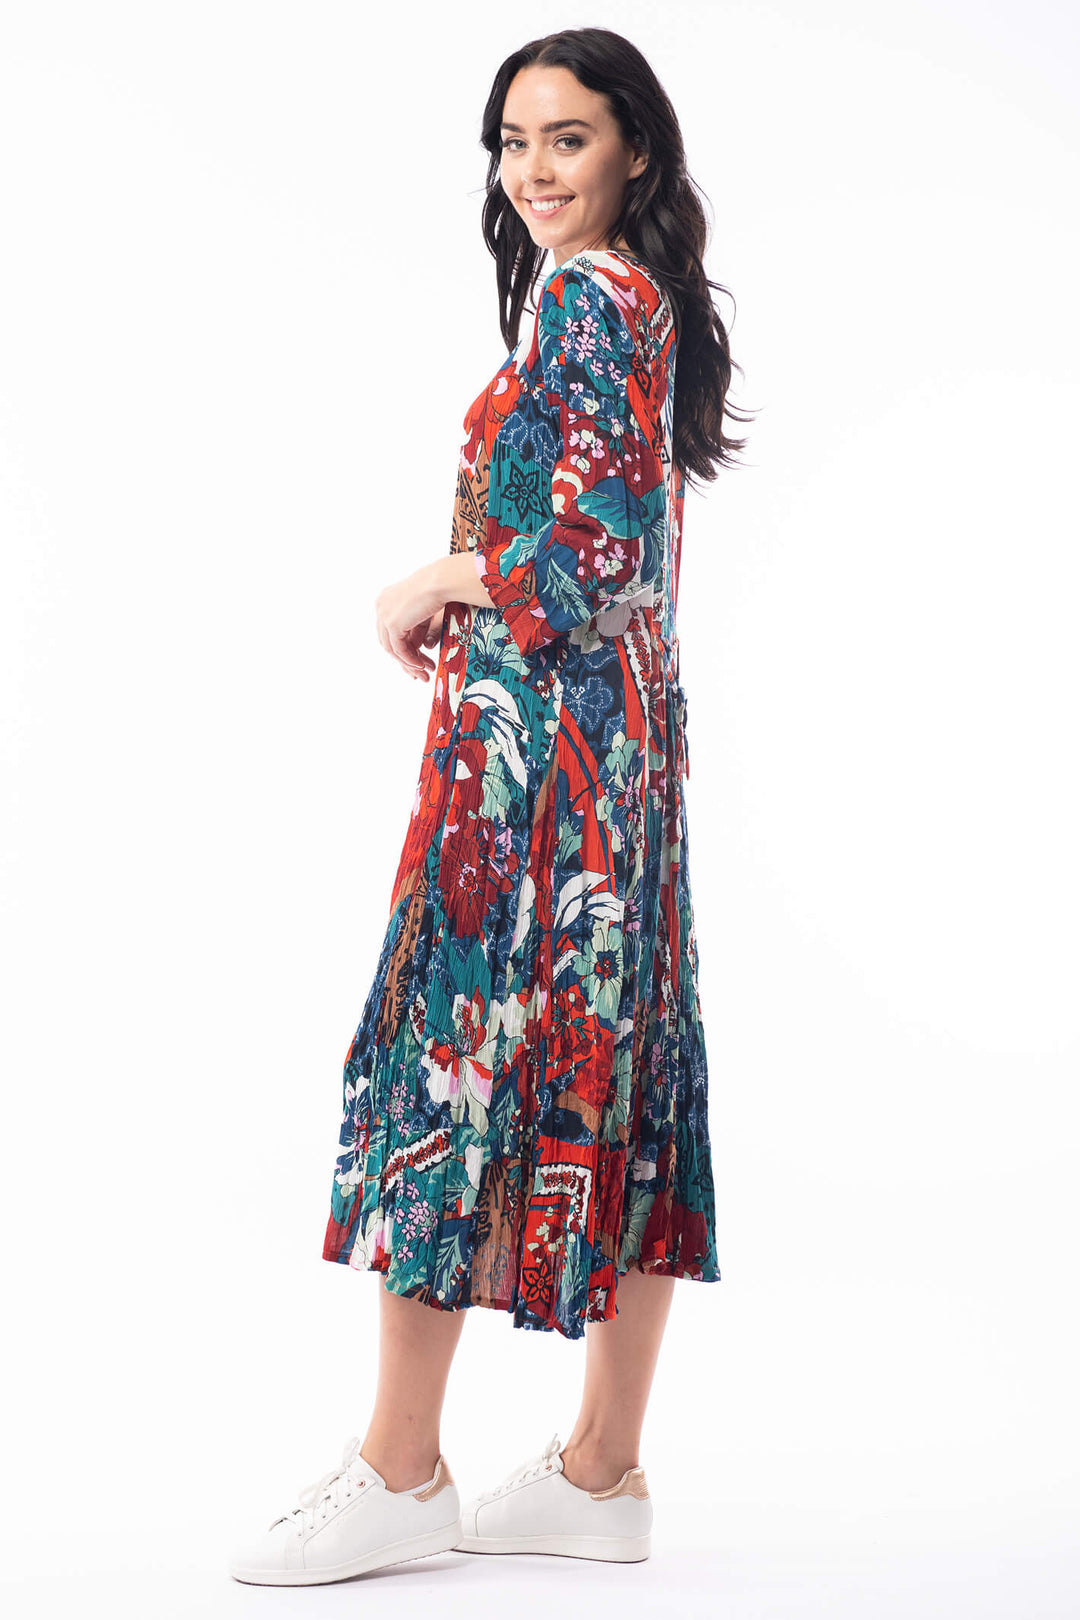 Orientique 2181 Multicolour Godet 34 Sleeve Apollo Print Dress - Shirley Allum Boutique